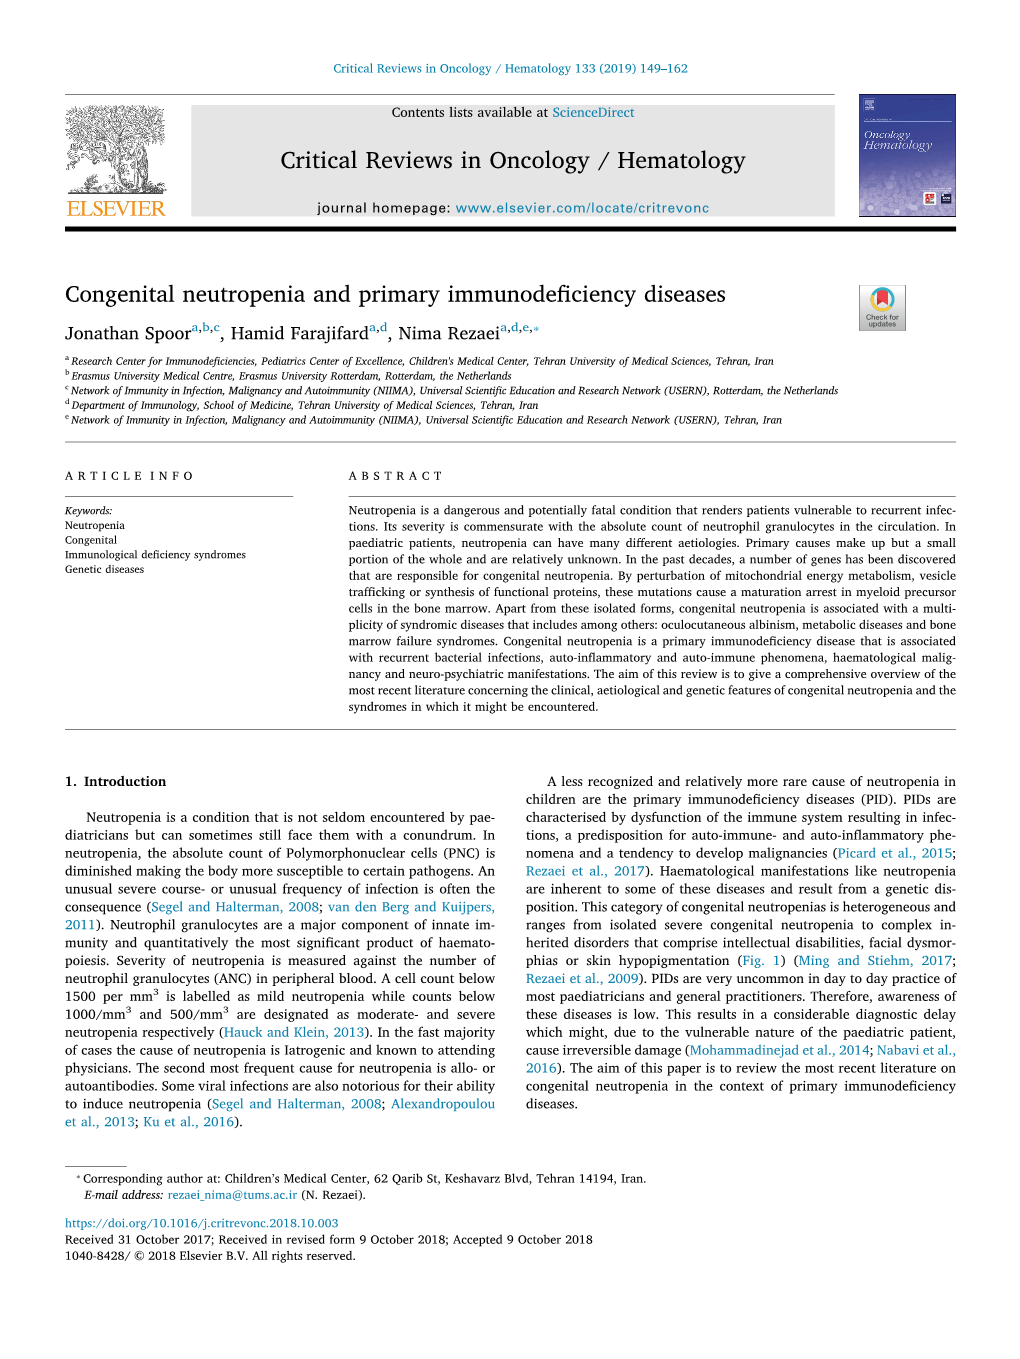 Congenital Neutropenia and Primary Immunodeficiency Diseases